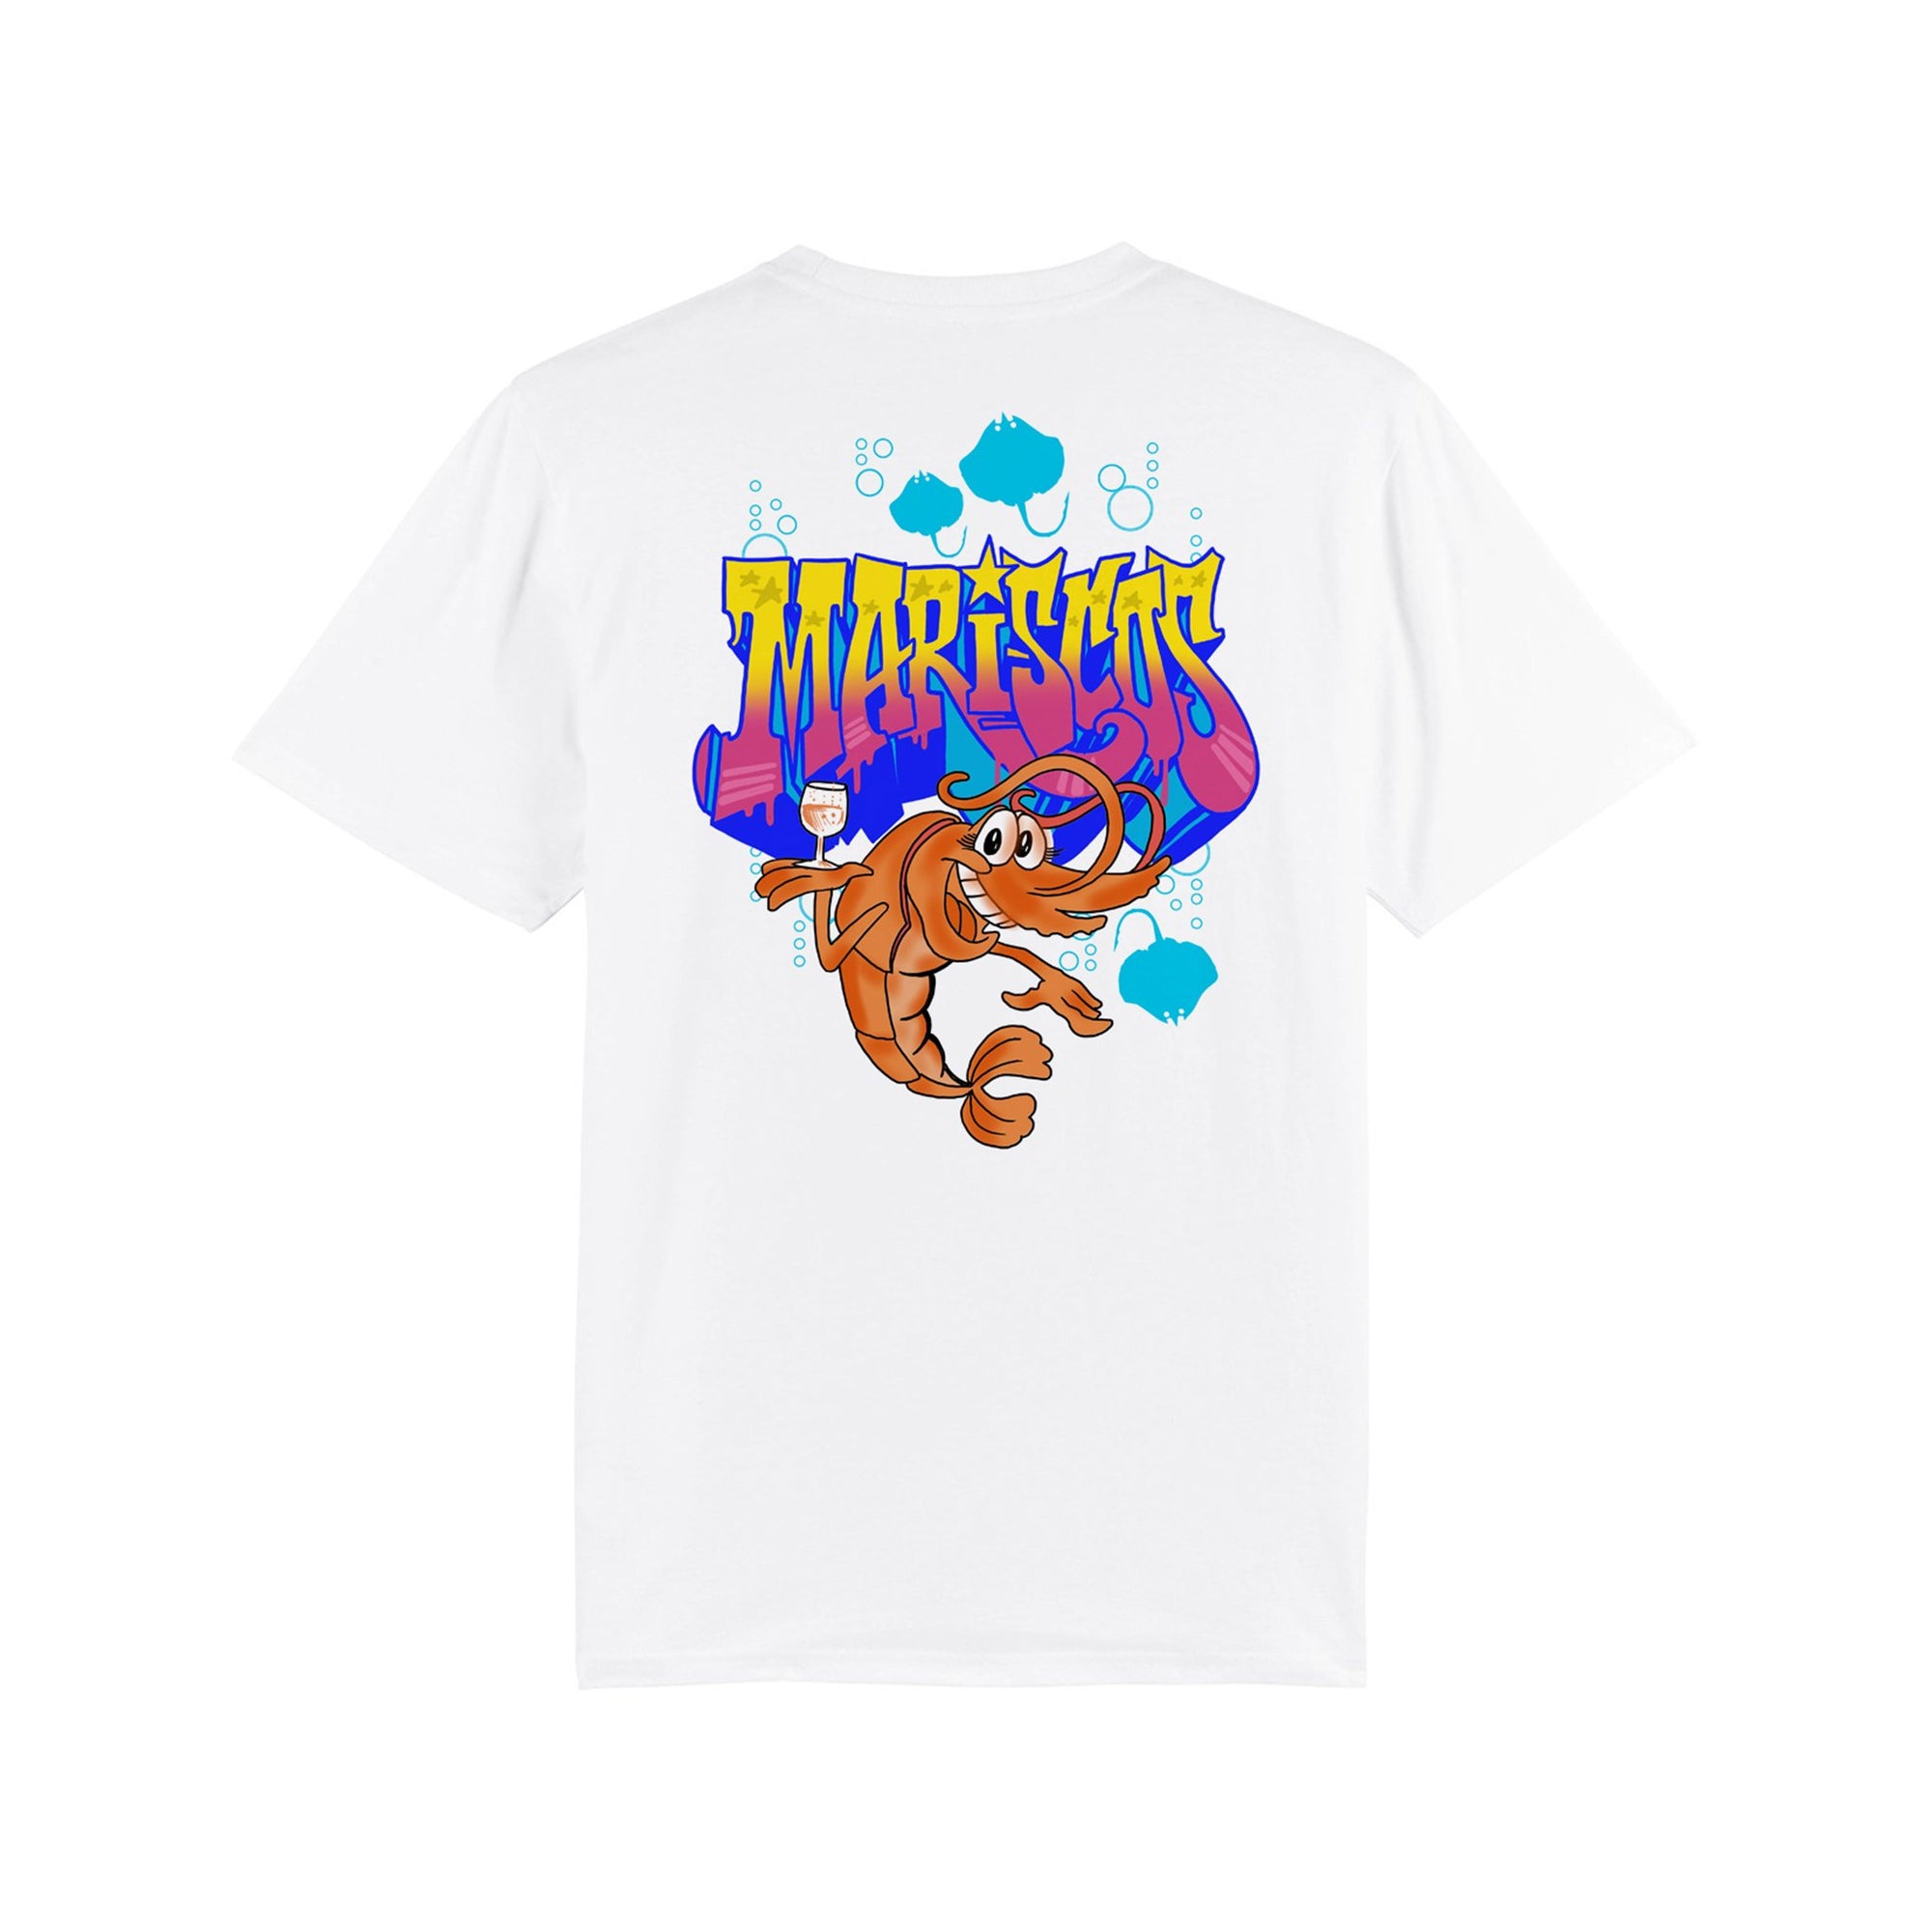 UJ Select x Barrafina Mariscos T-shirt – With Prawn